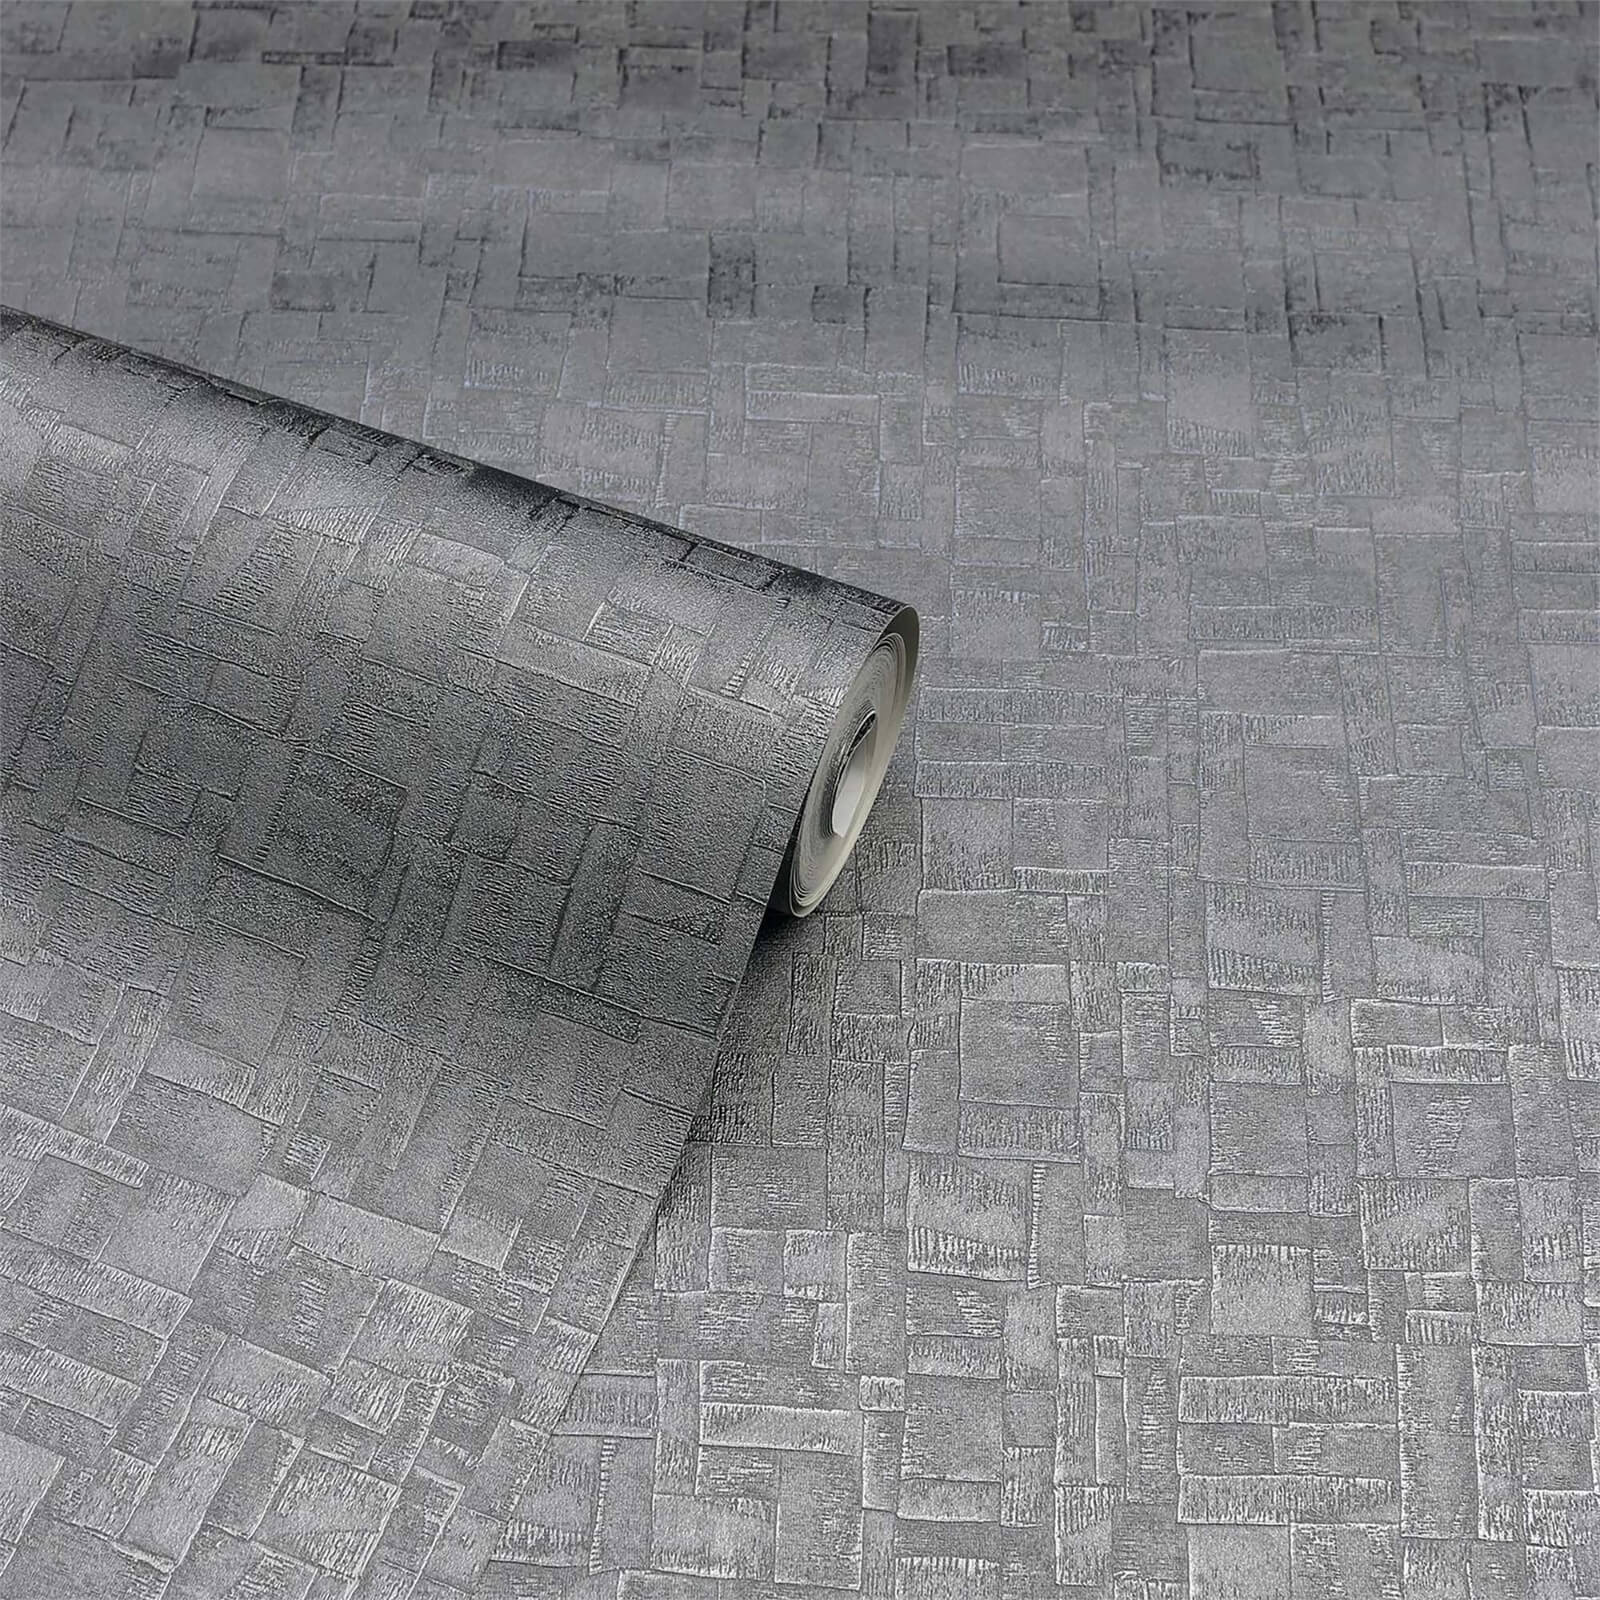 Arthouse Basalt Texture Gunmetal Wallpaper